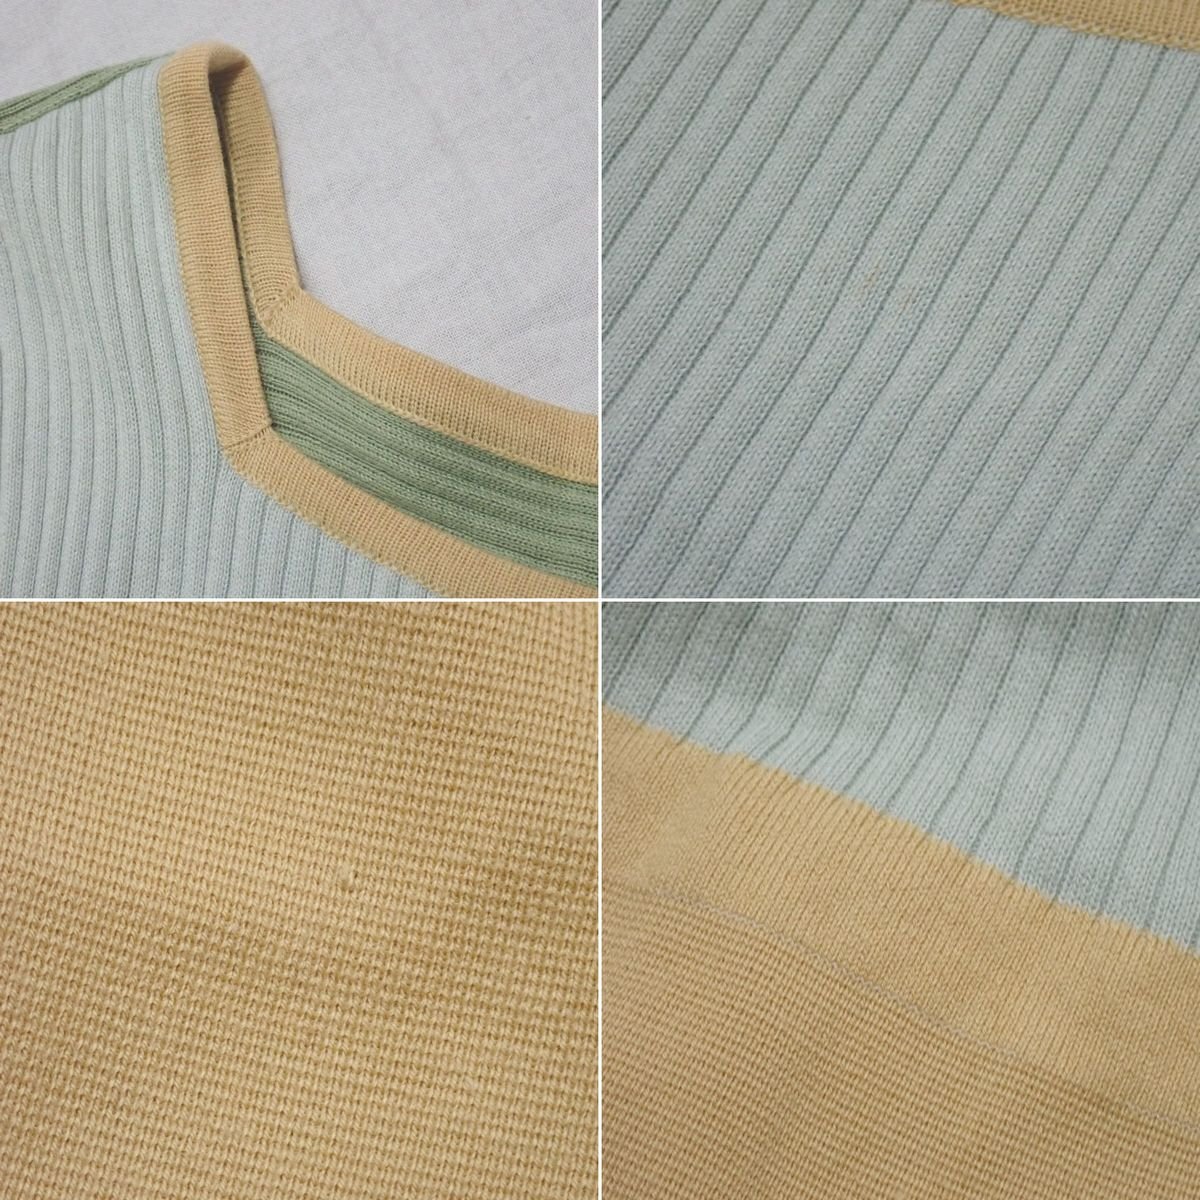 *FENDI/ Fendi short sleeves knitted One-piece 38/M corresponding / knees height / green group × light blue / cotton / sleeve chiffon / scoop do neck &1976800114